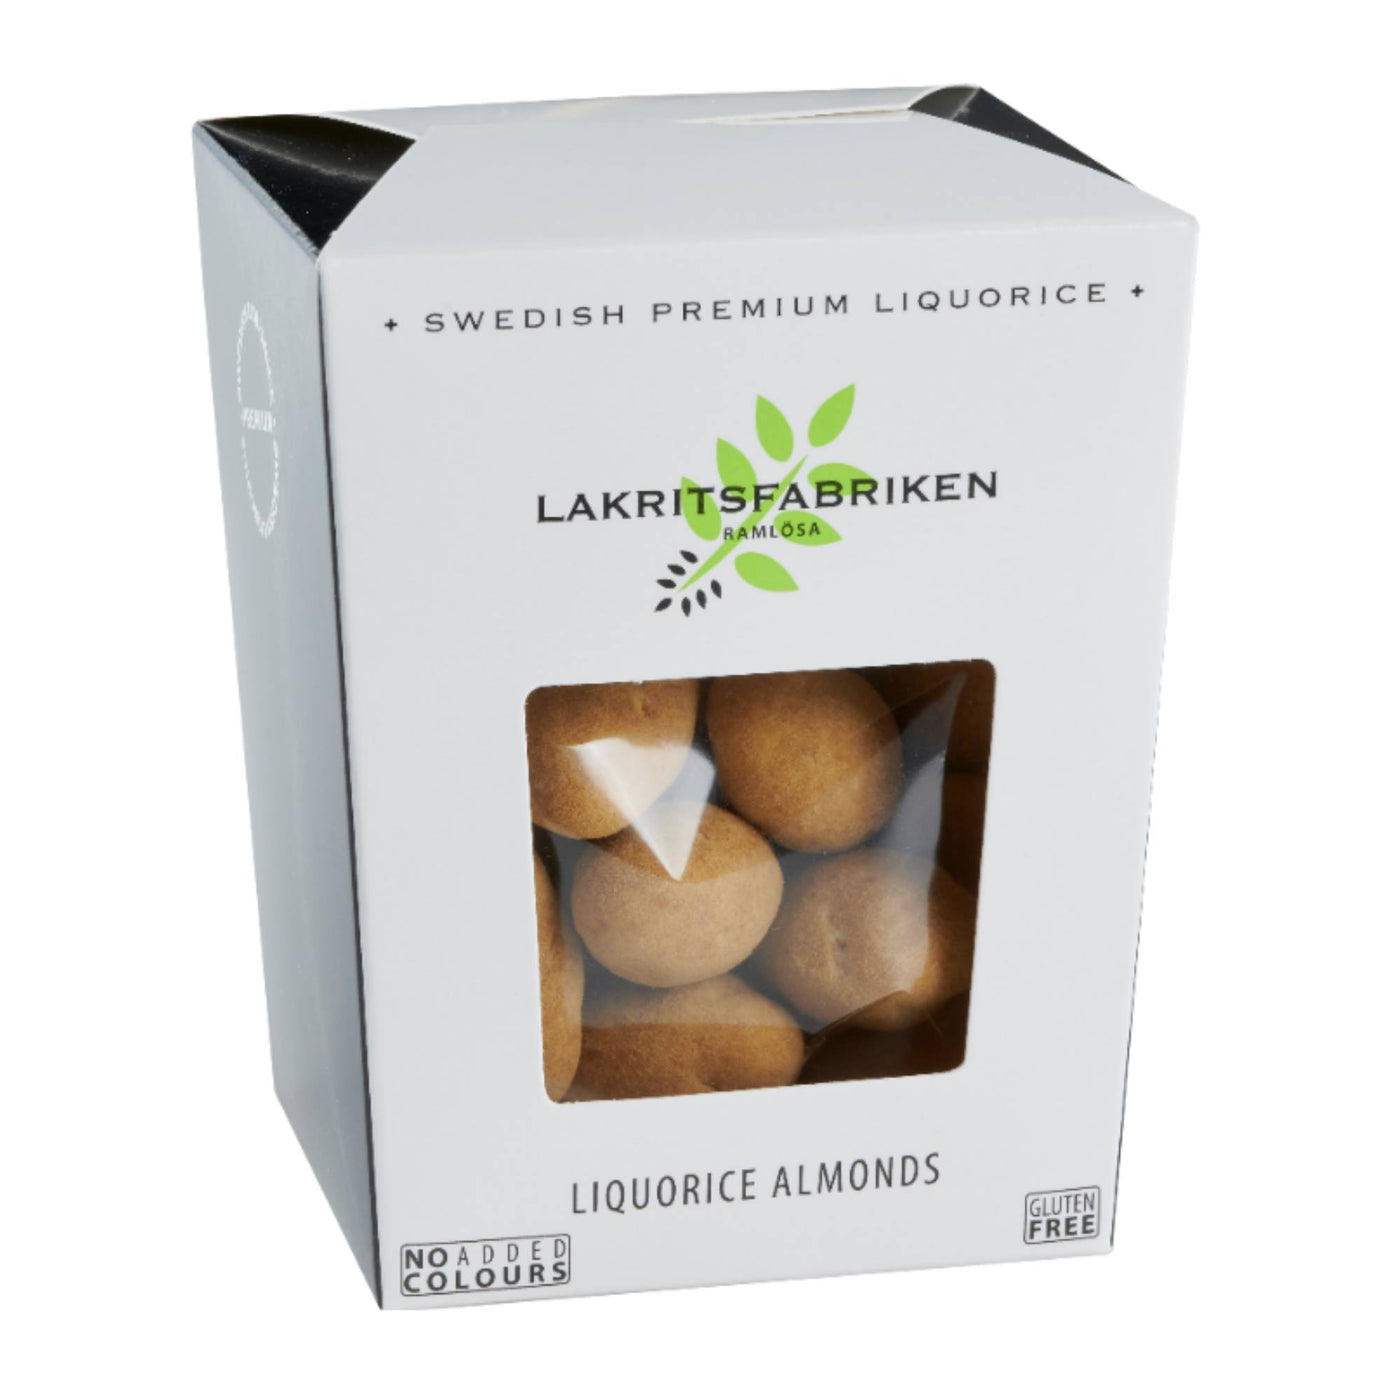 Lakritsfabriken Liquorice Almonds – White Chocolate & Salt Liquorice Powder